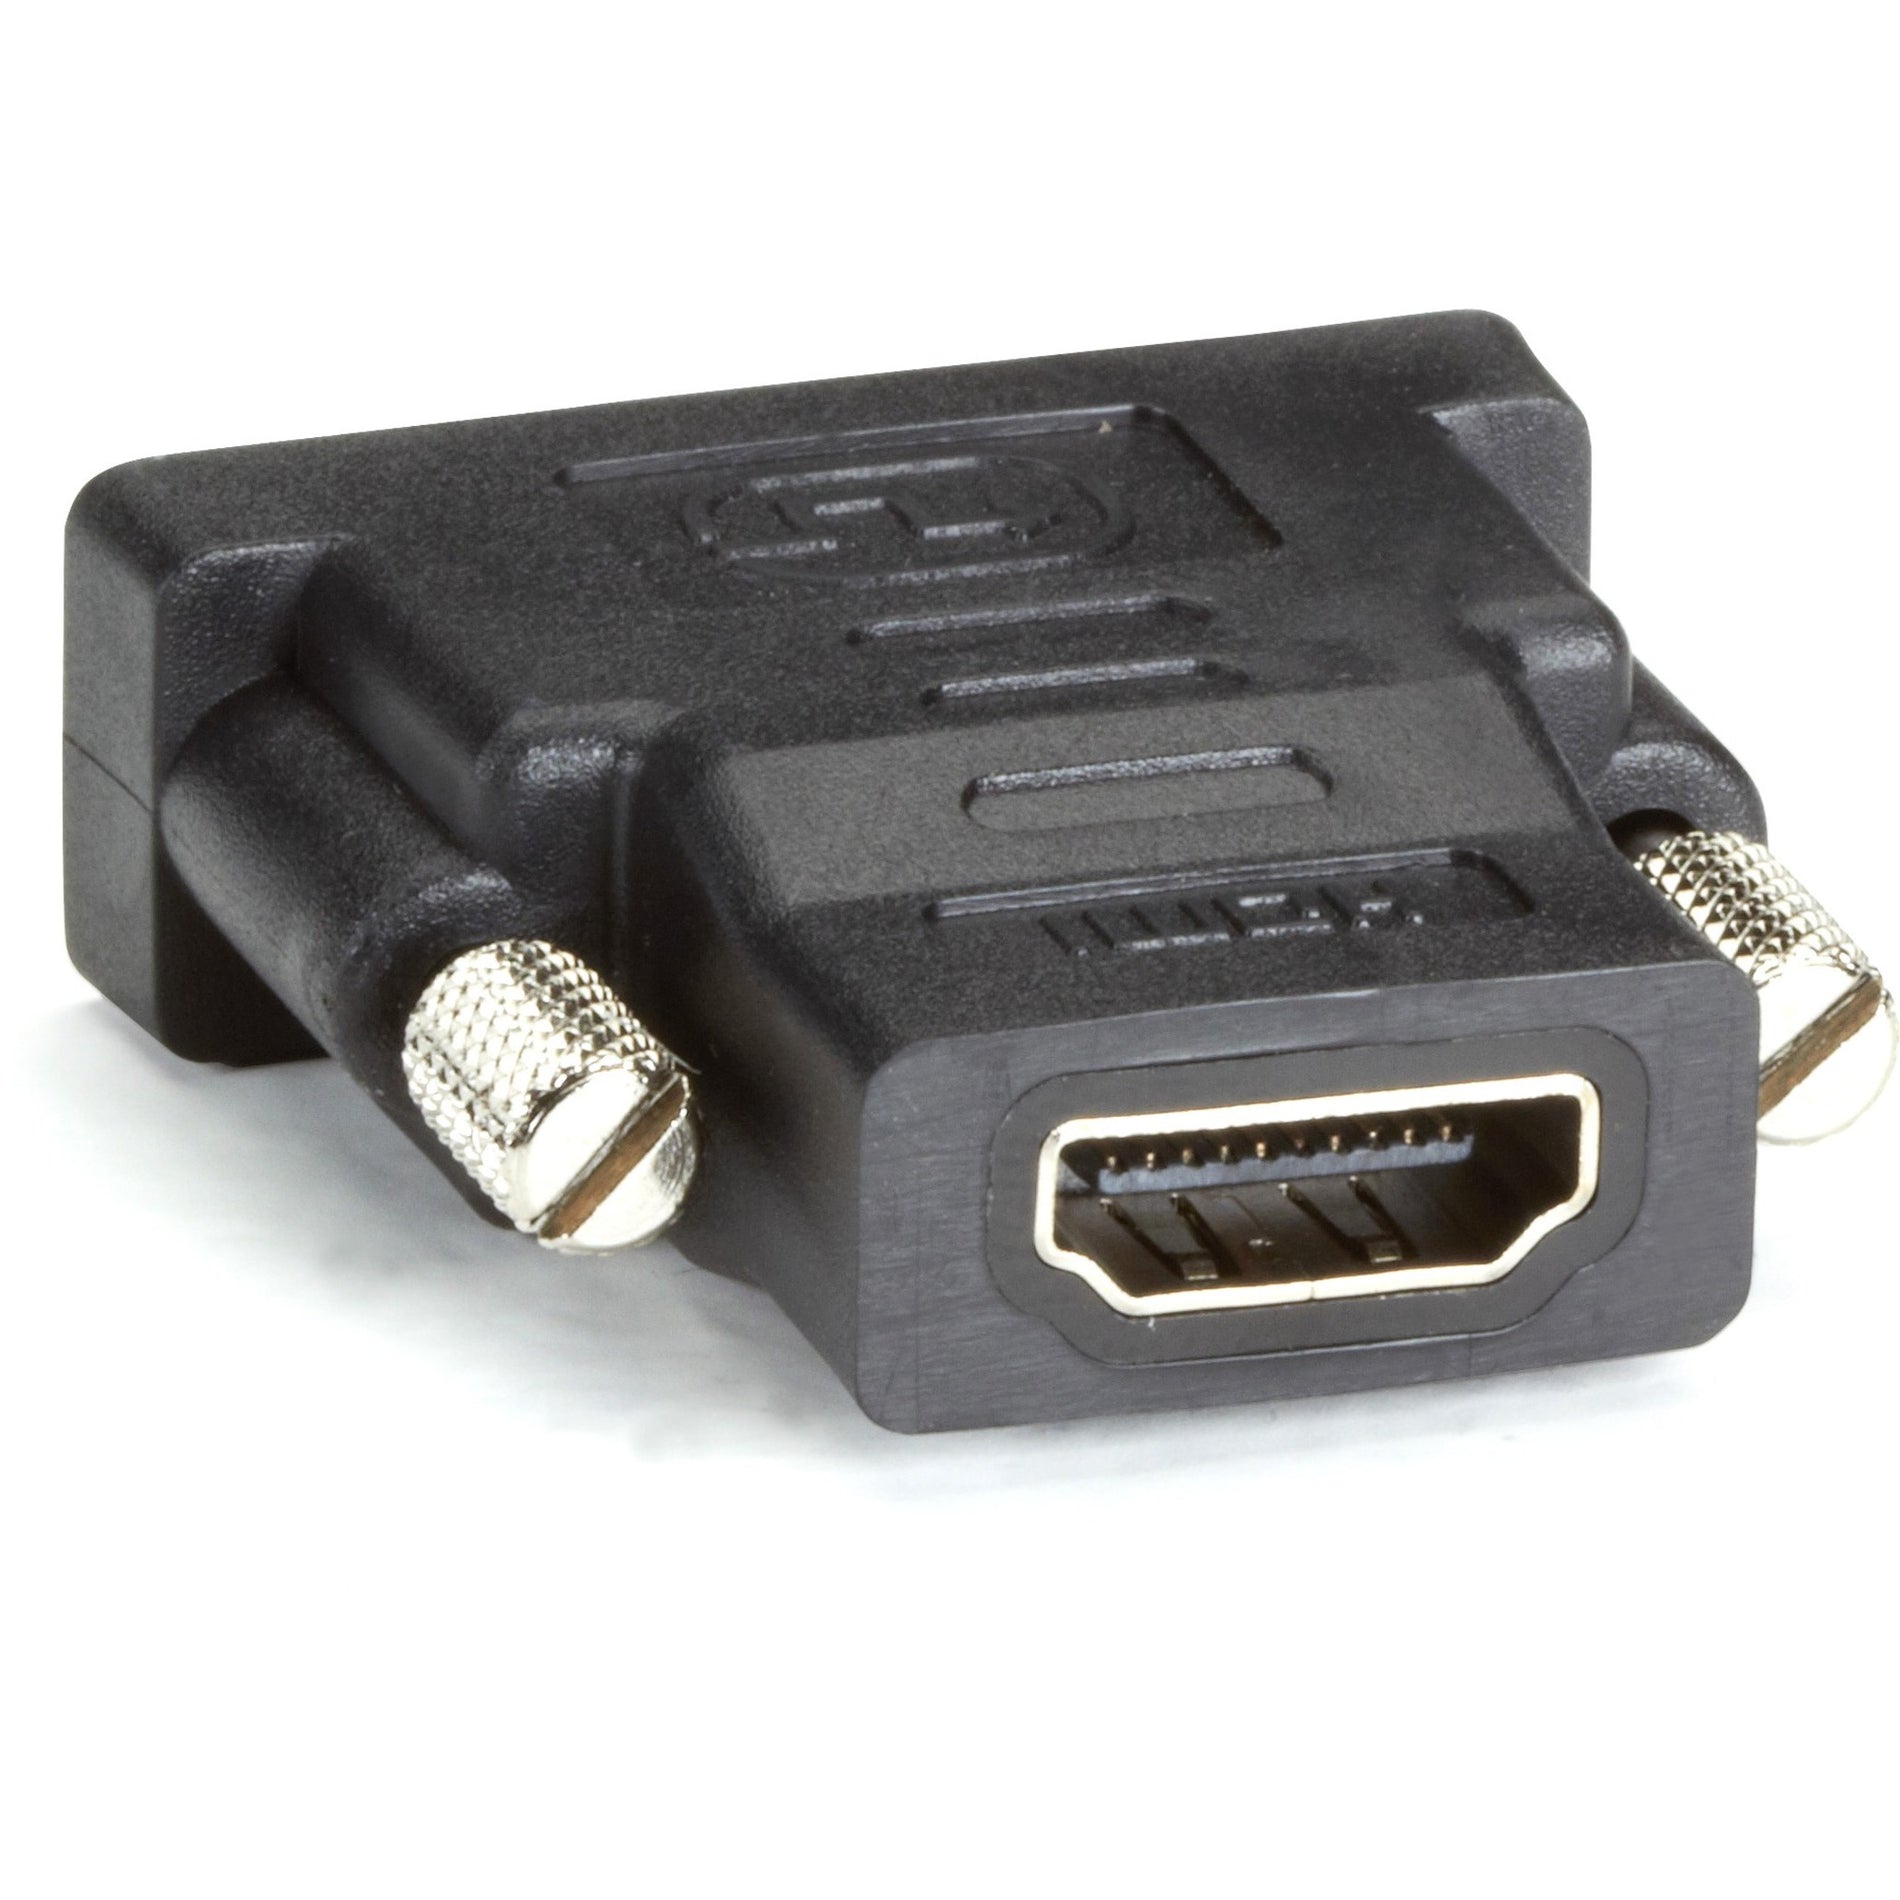 محول HDMI إلى DVI-D FA795-R2 من Black Box ، مصبوب ، مطلي بالنيكل ، ضمان مدى الحياة